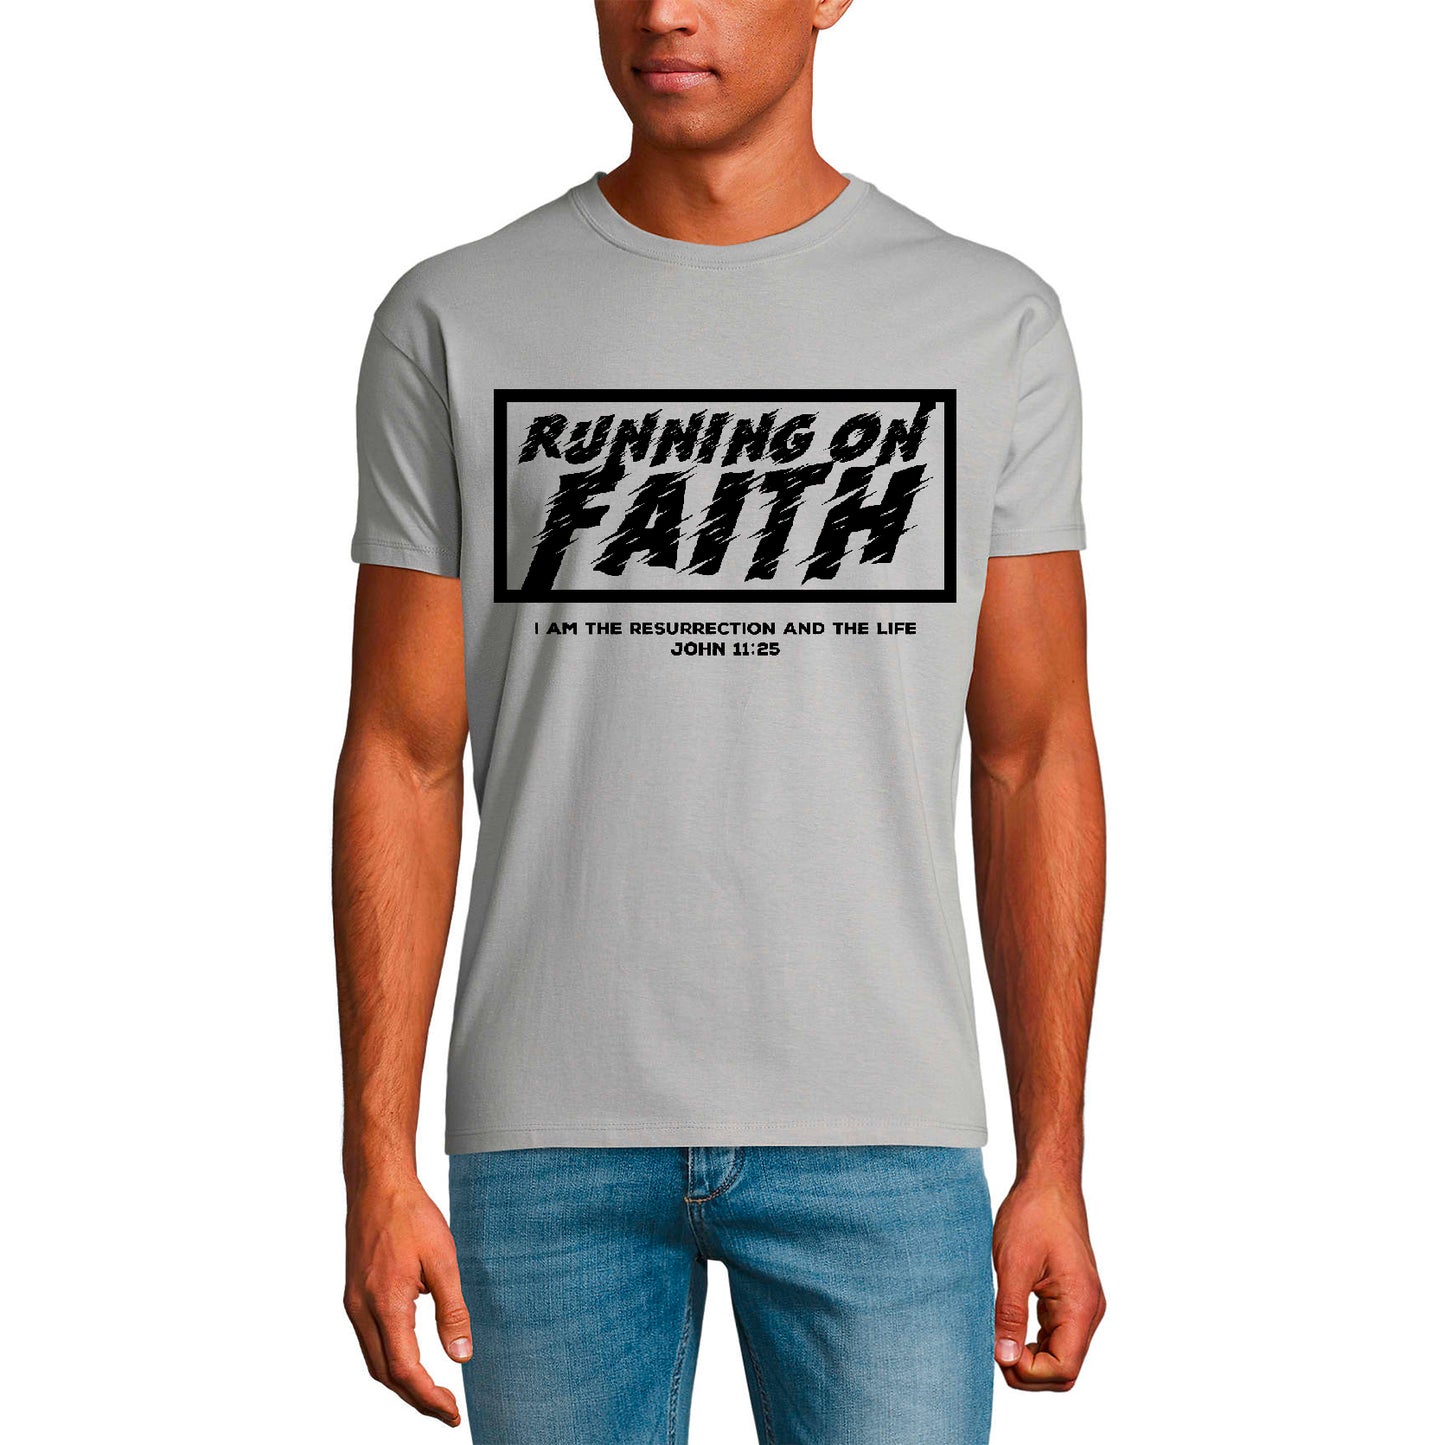 ULTRABASIC Herren-T-Shirt „Running on Faith“ mit religiösem Motiv – Jesus Christus-Shirt